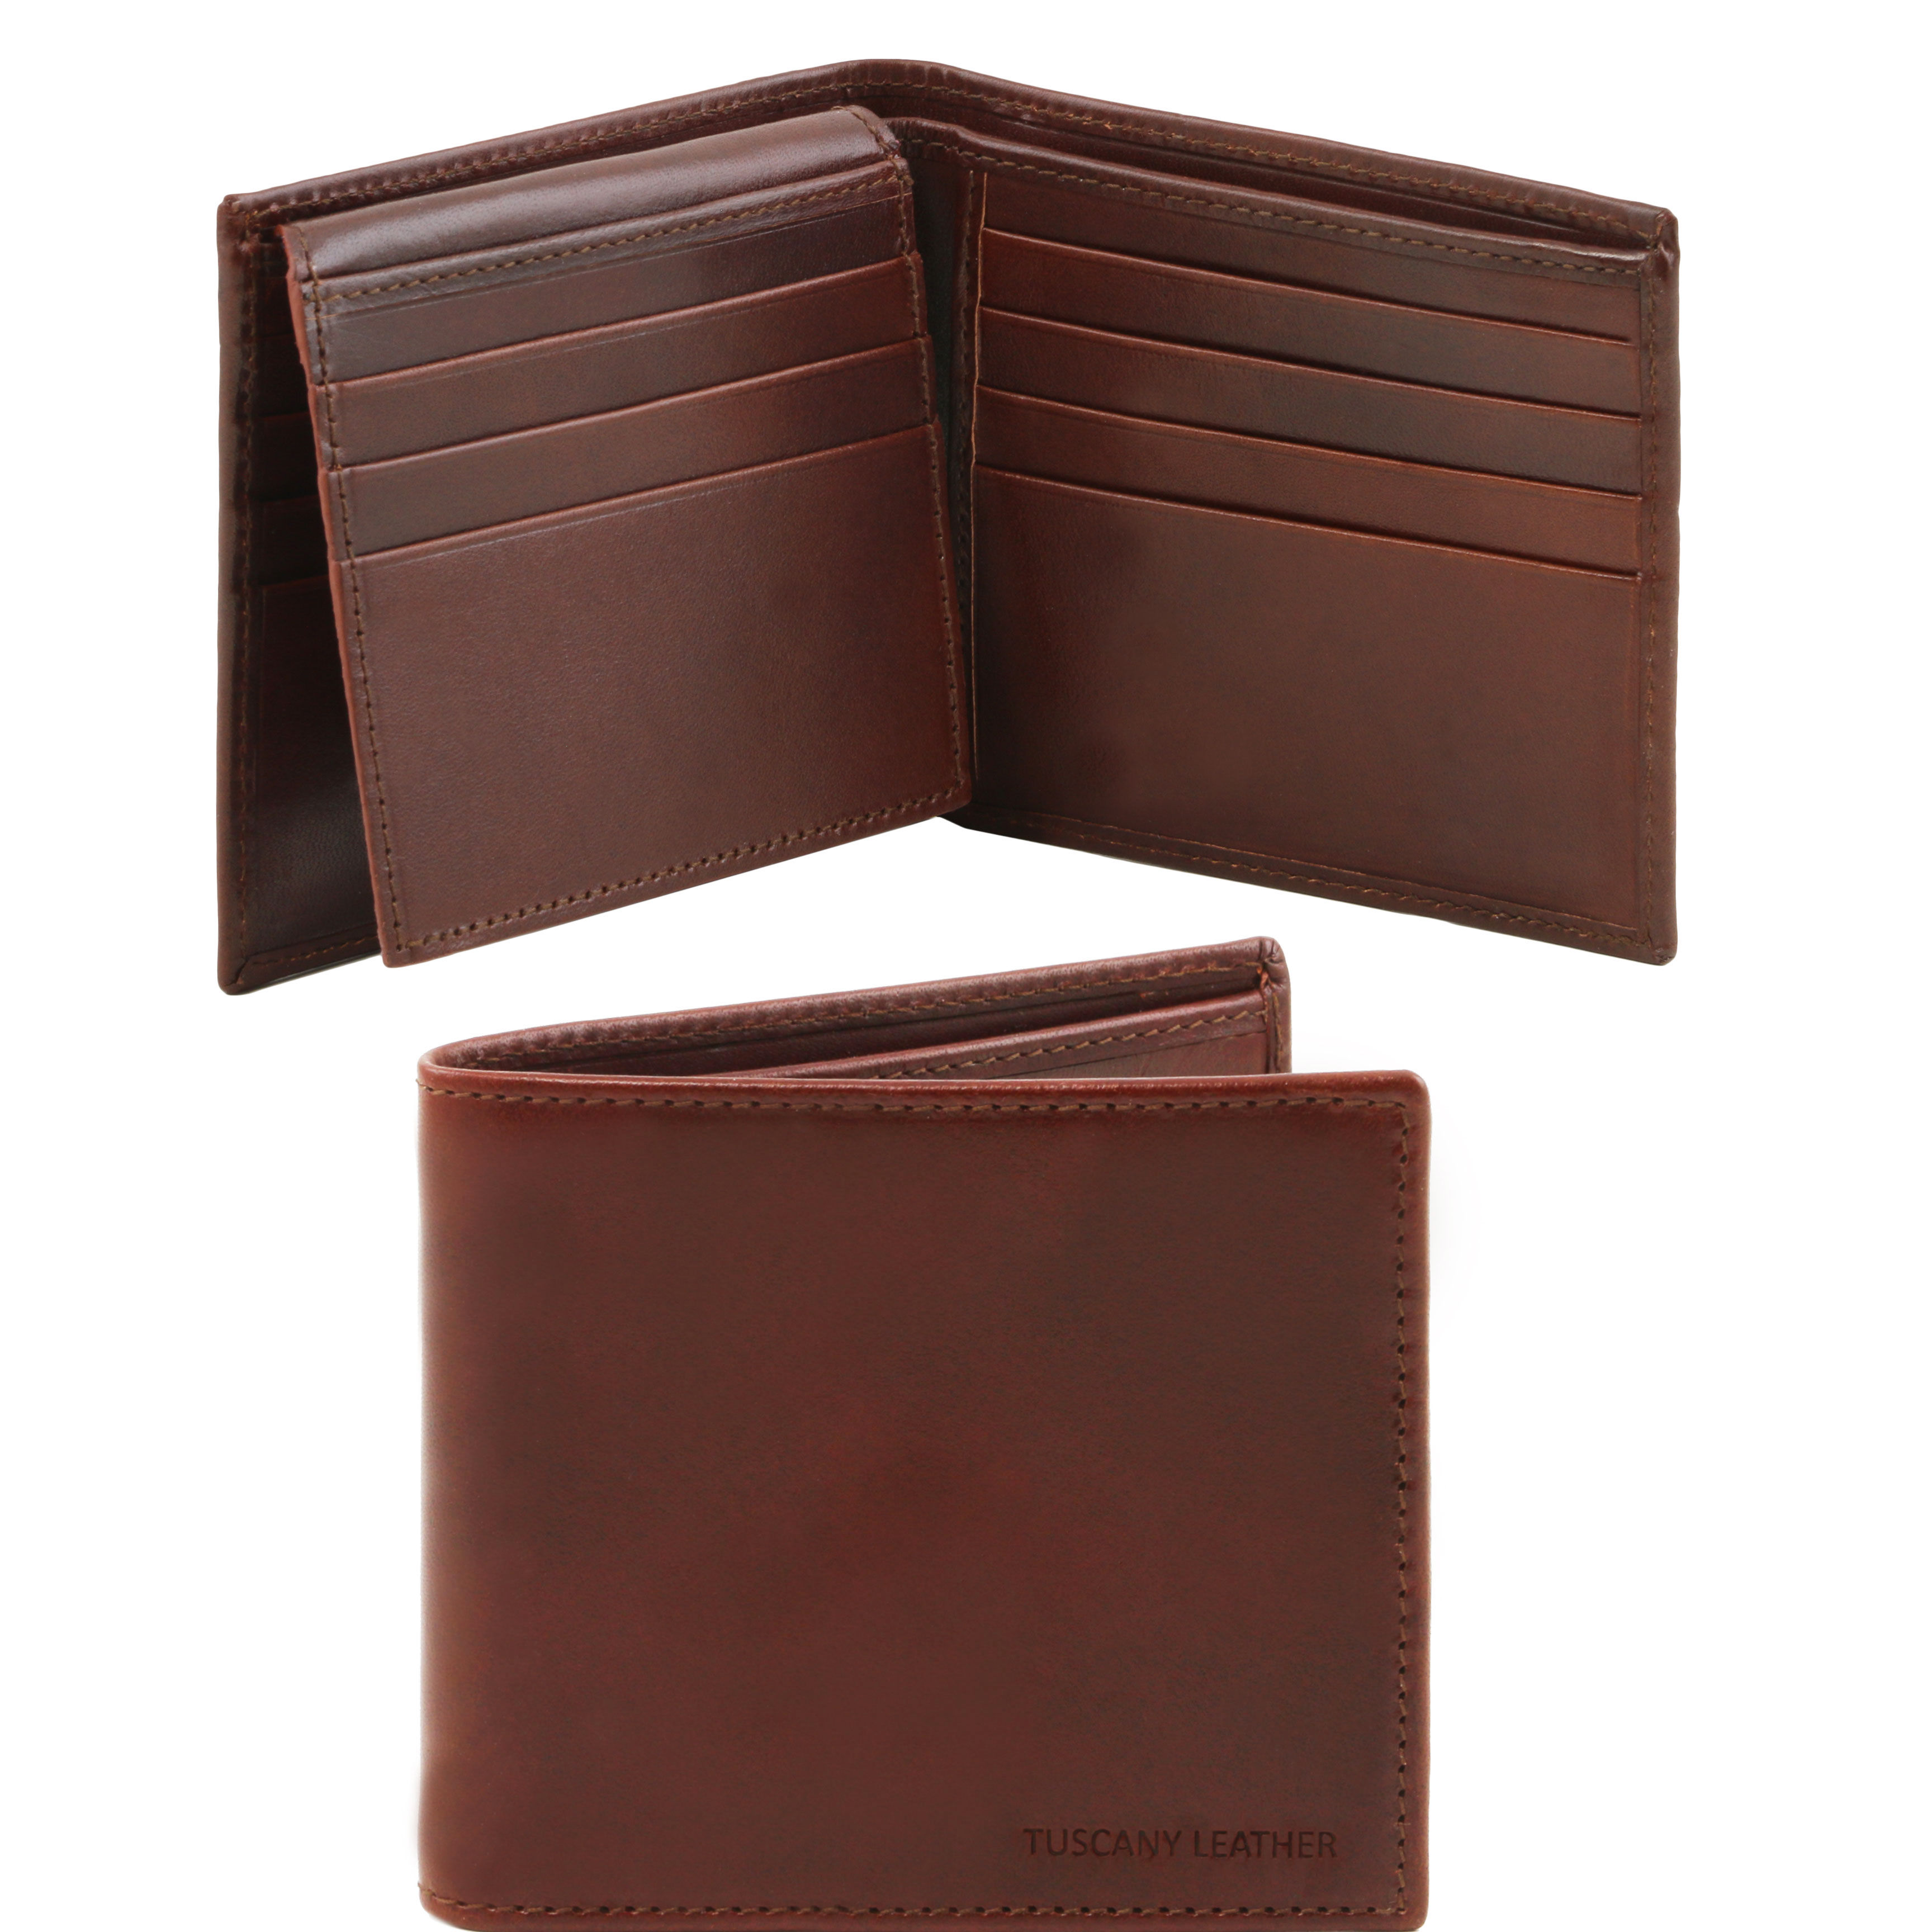 Portofel Tuscany Leather din piele maro exclusive 3 fold